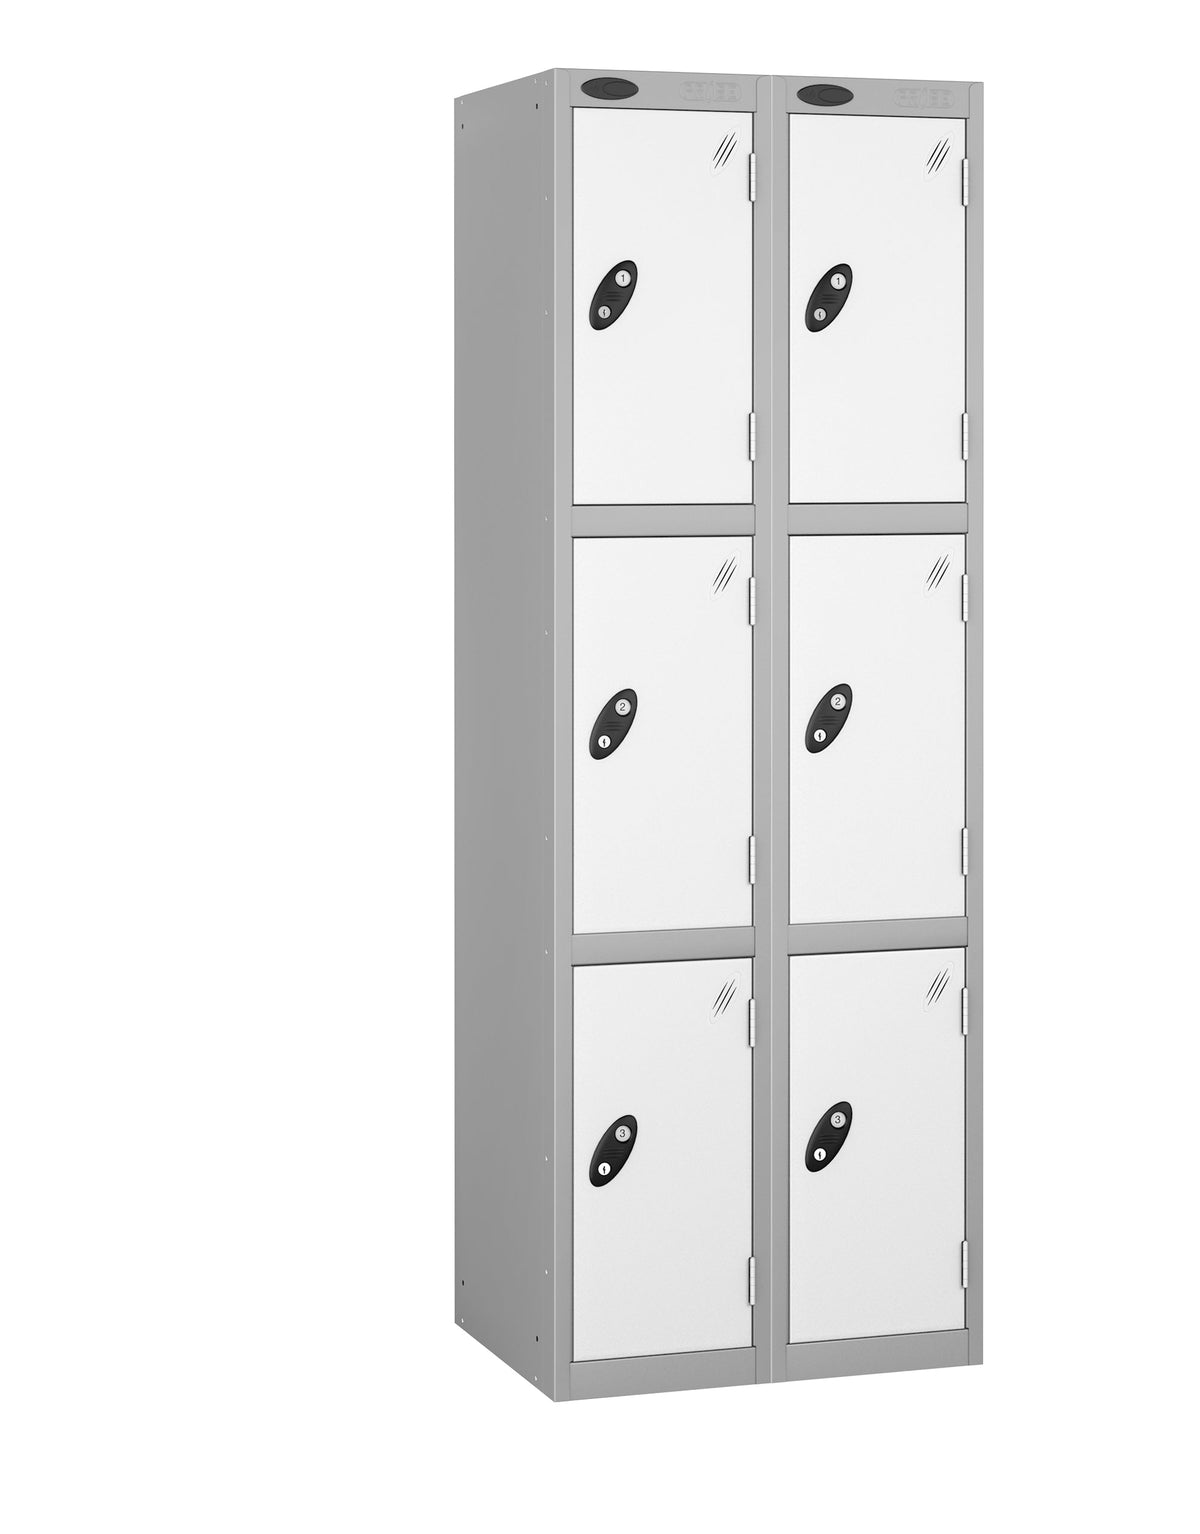 PROBEBOX STANDARD 2 NEST STEEL LOCKERS - SMOKEY WHITE 3 DOOR Storage Lockers > Lockers > Cabinets > Storage > Probe > One Stop For Safety   